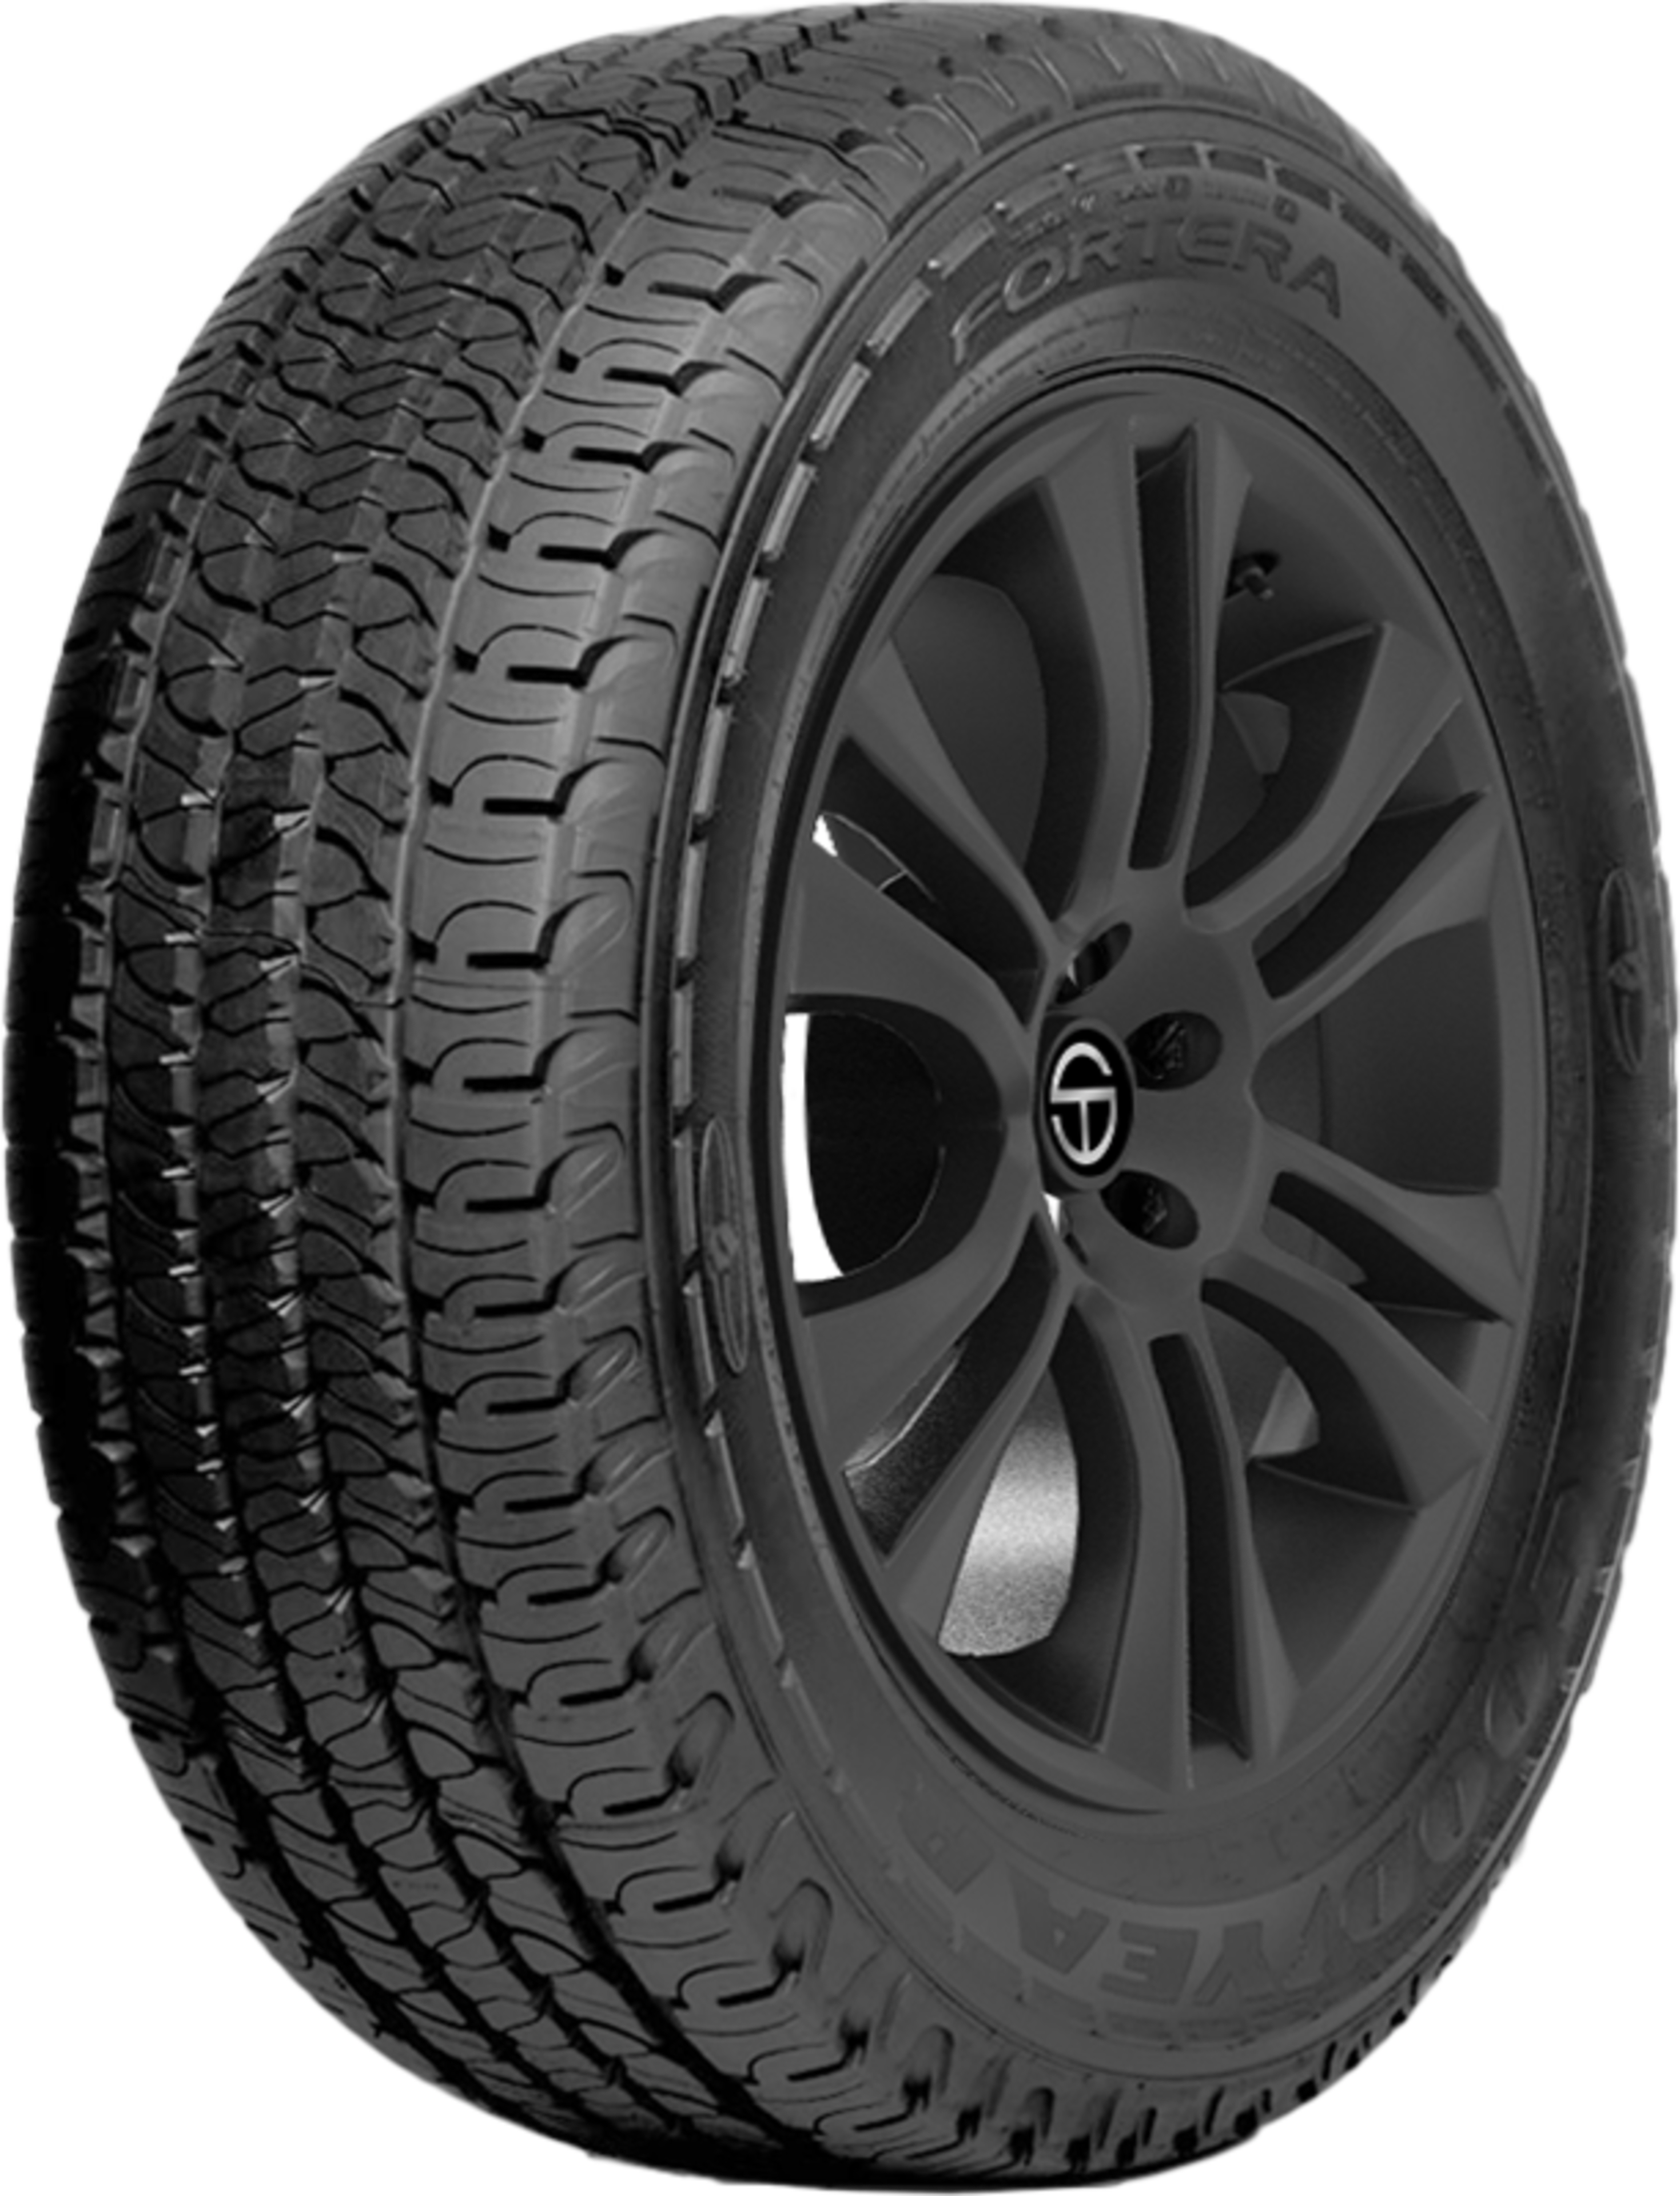 Buy Goodyear Fortera SilentArmor Technology Tires Online | SimpleTire